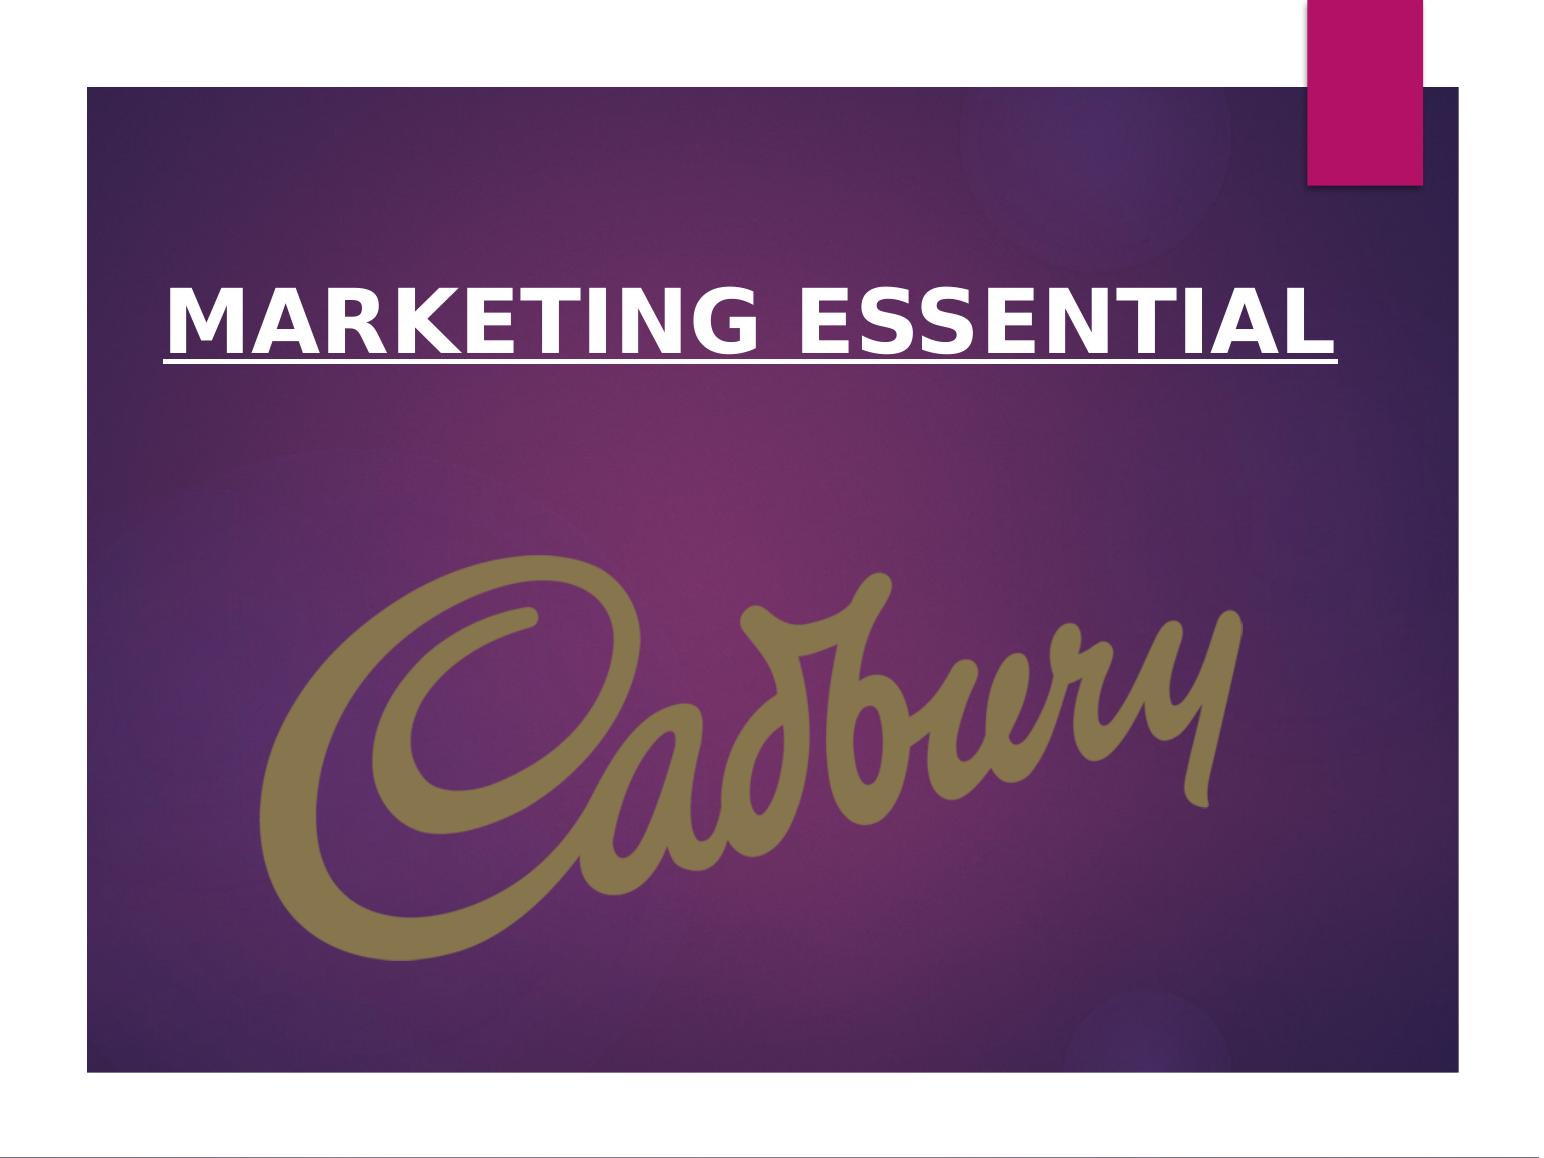 Marketing Essentials: Cadbury PPT_1